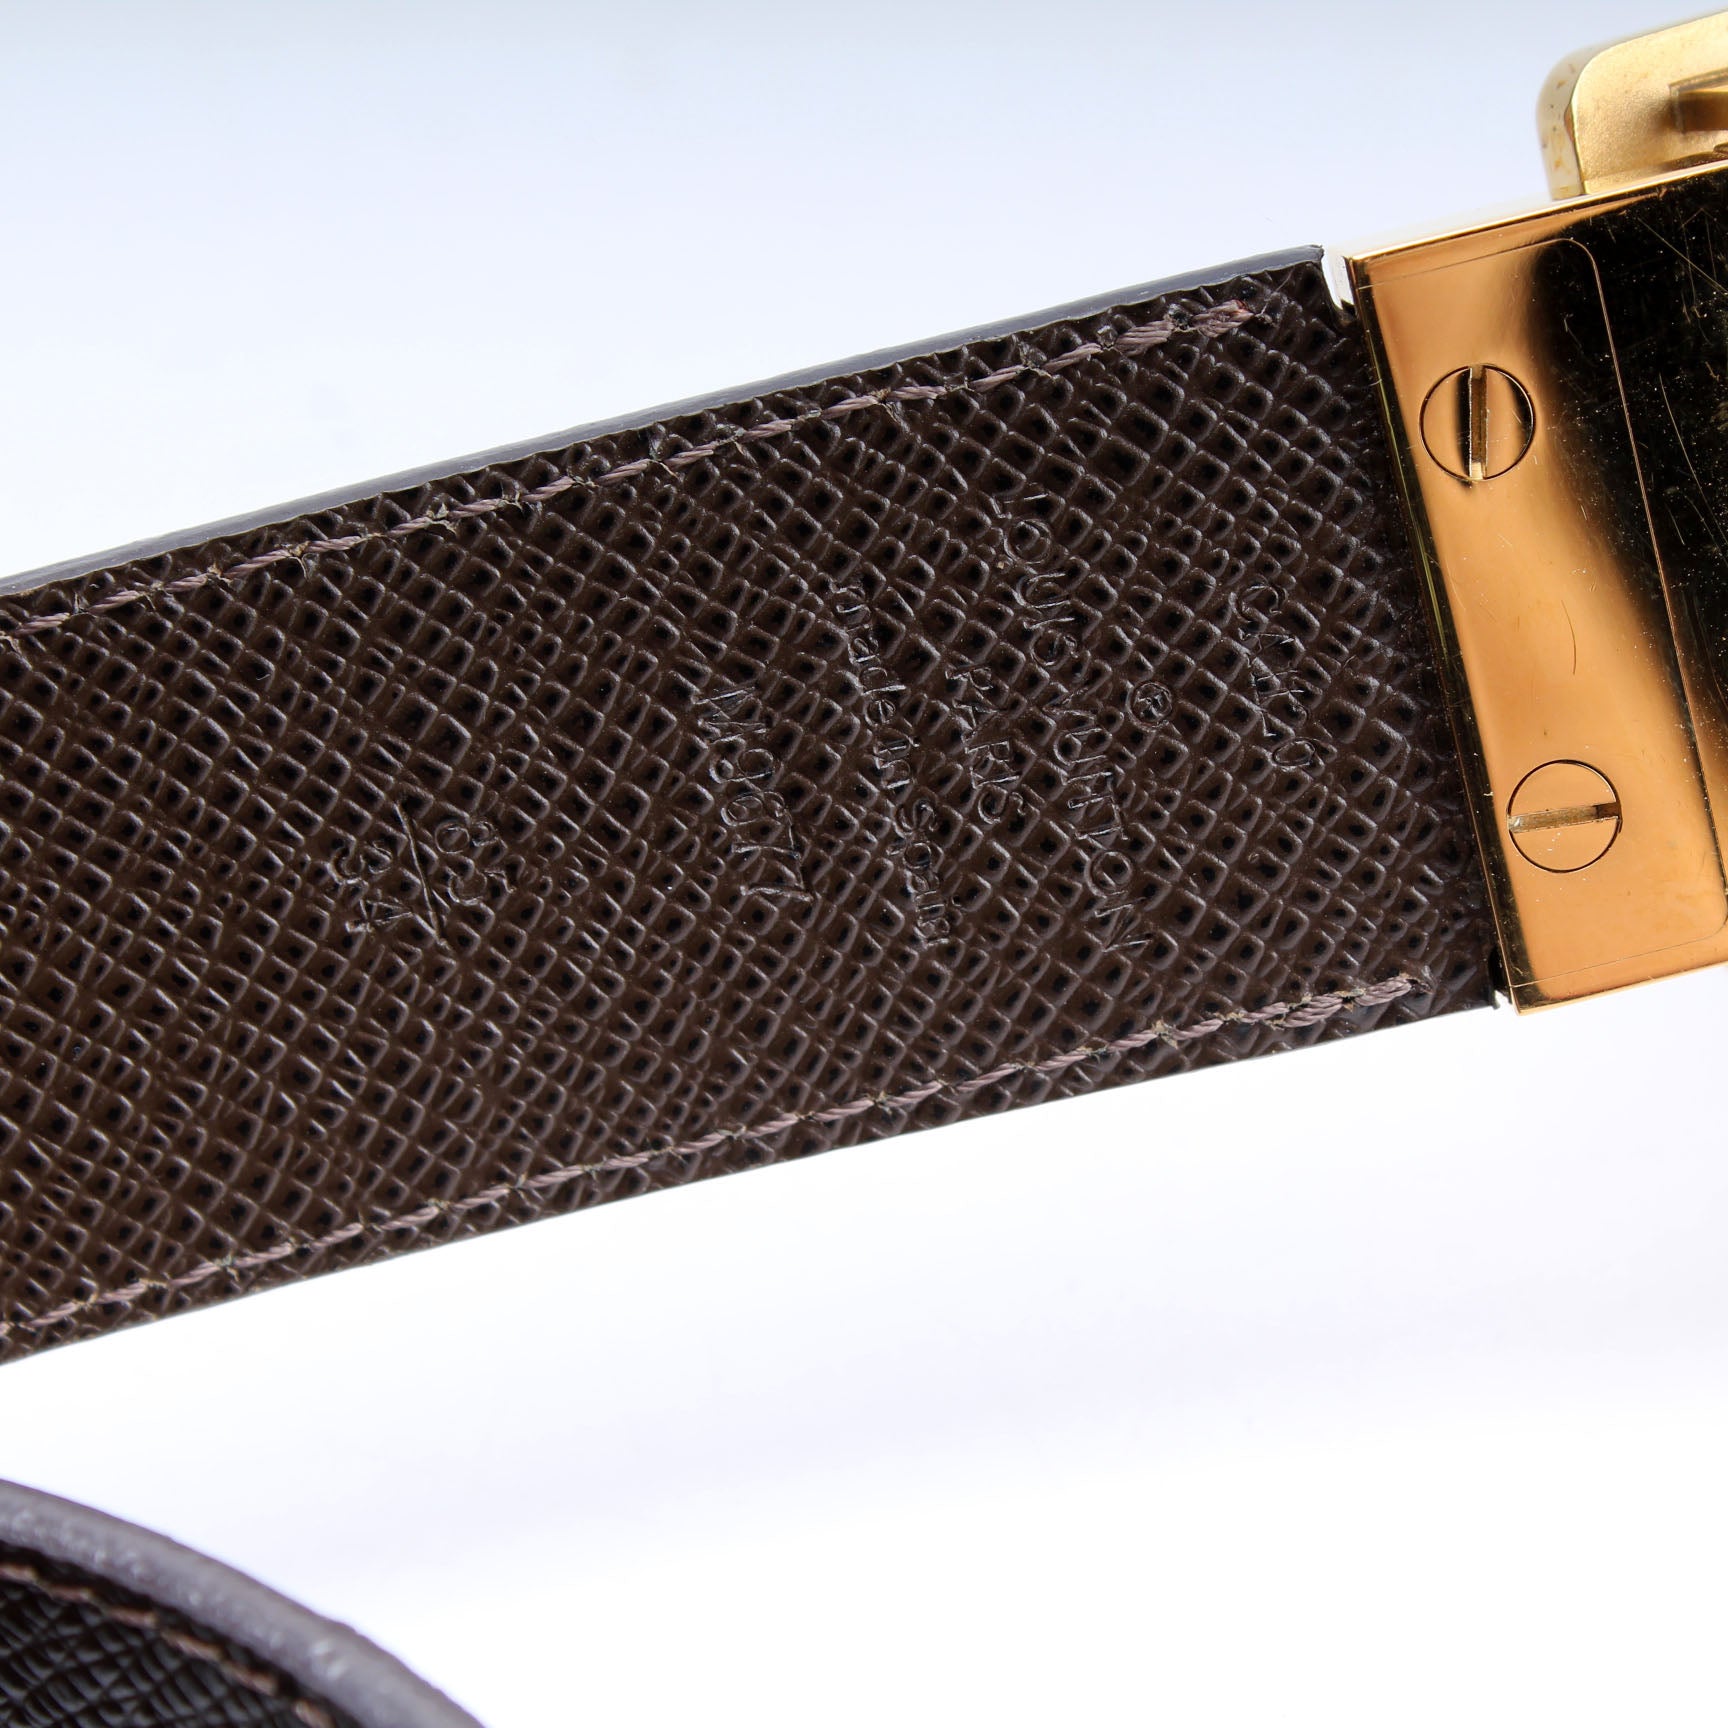 Louis Vuitton Vintage - Damier Ebene Inventeur Belt - Brown Gold - Leather  Belt - Luxury High Quality - Avvenice